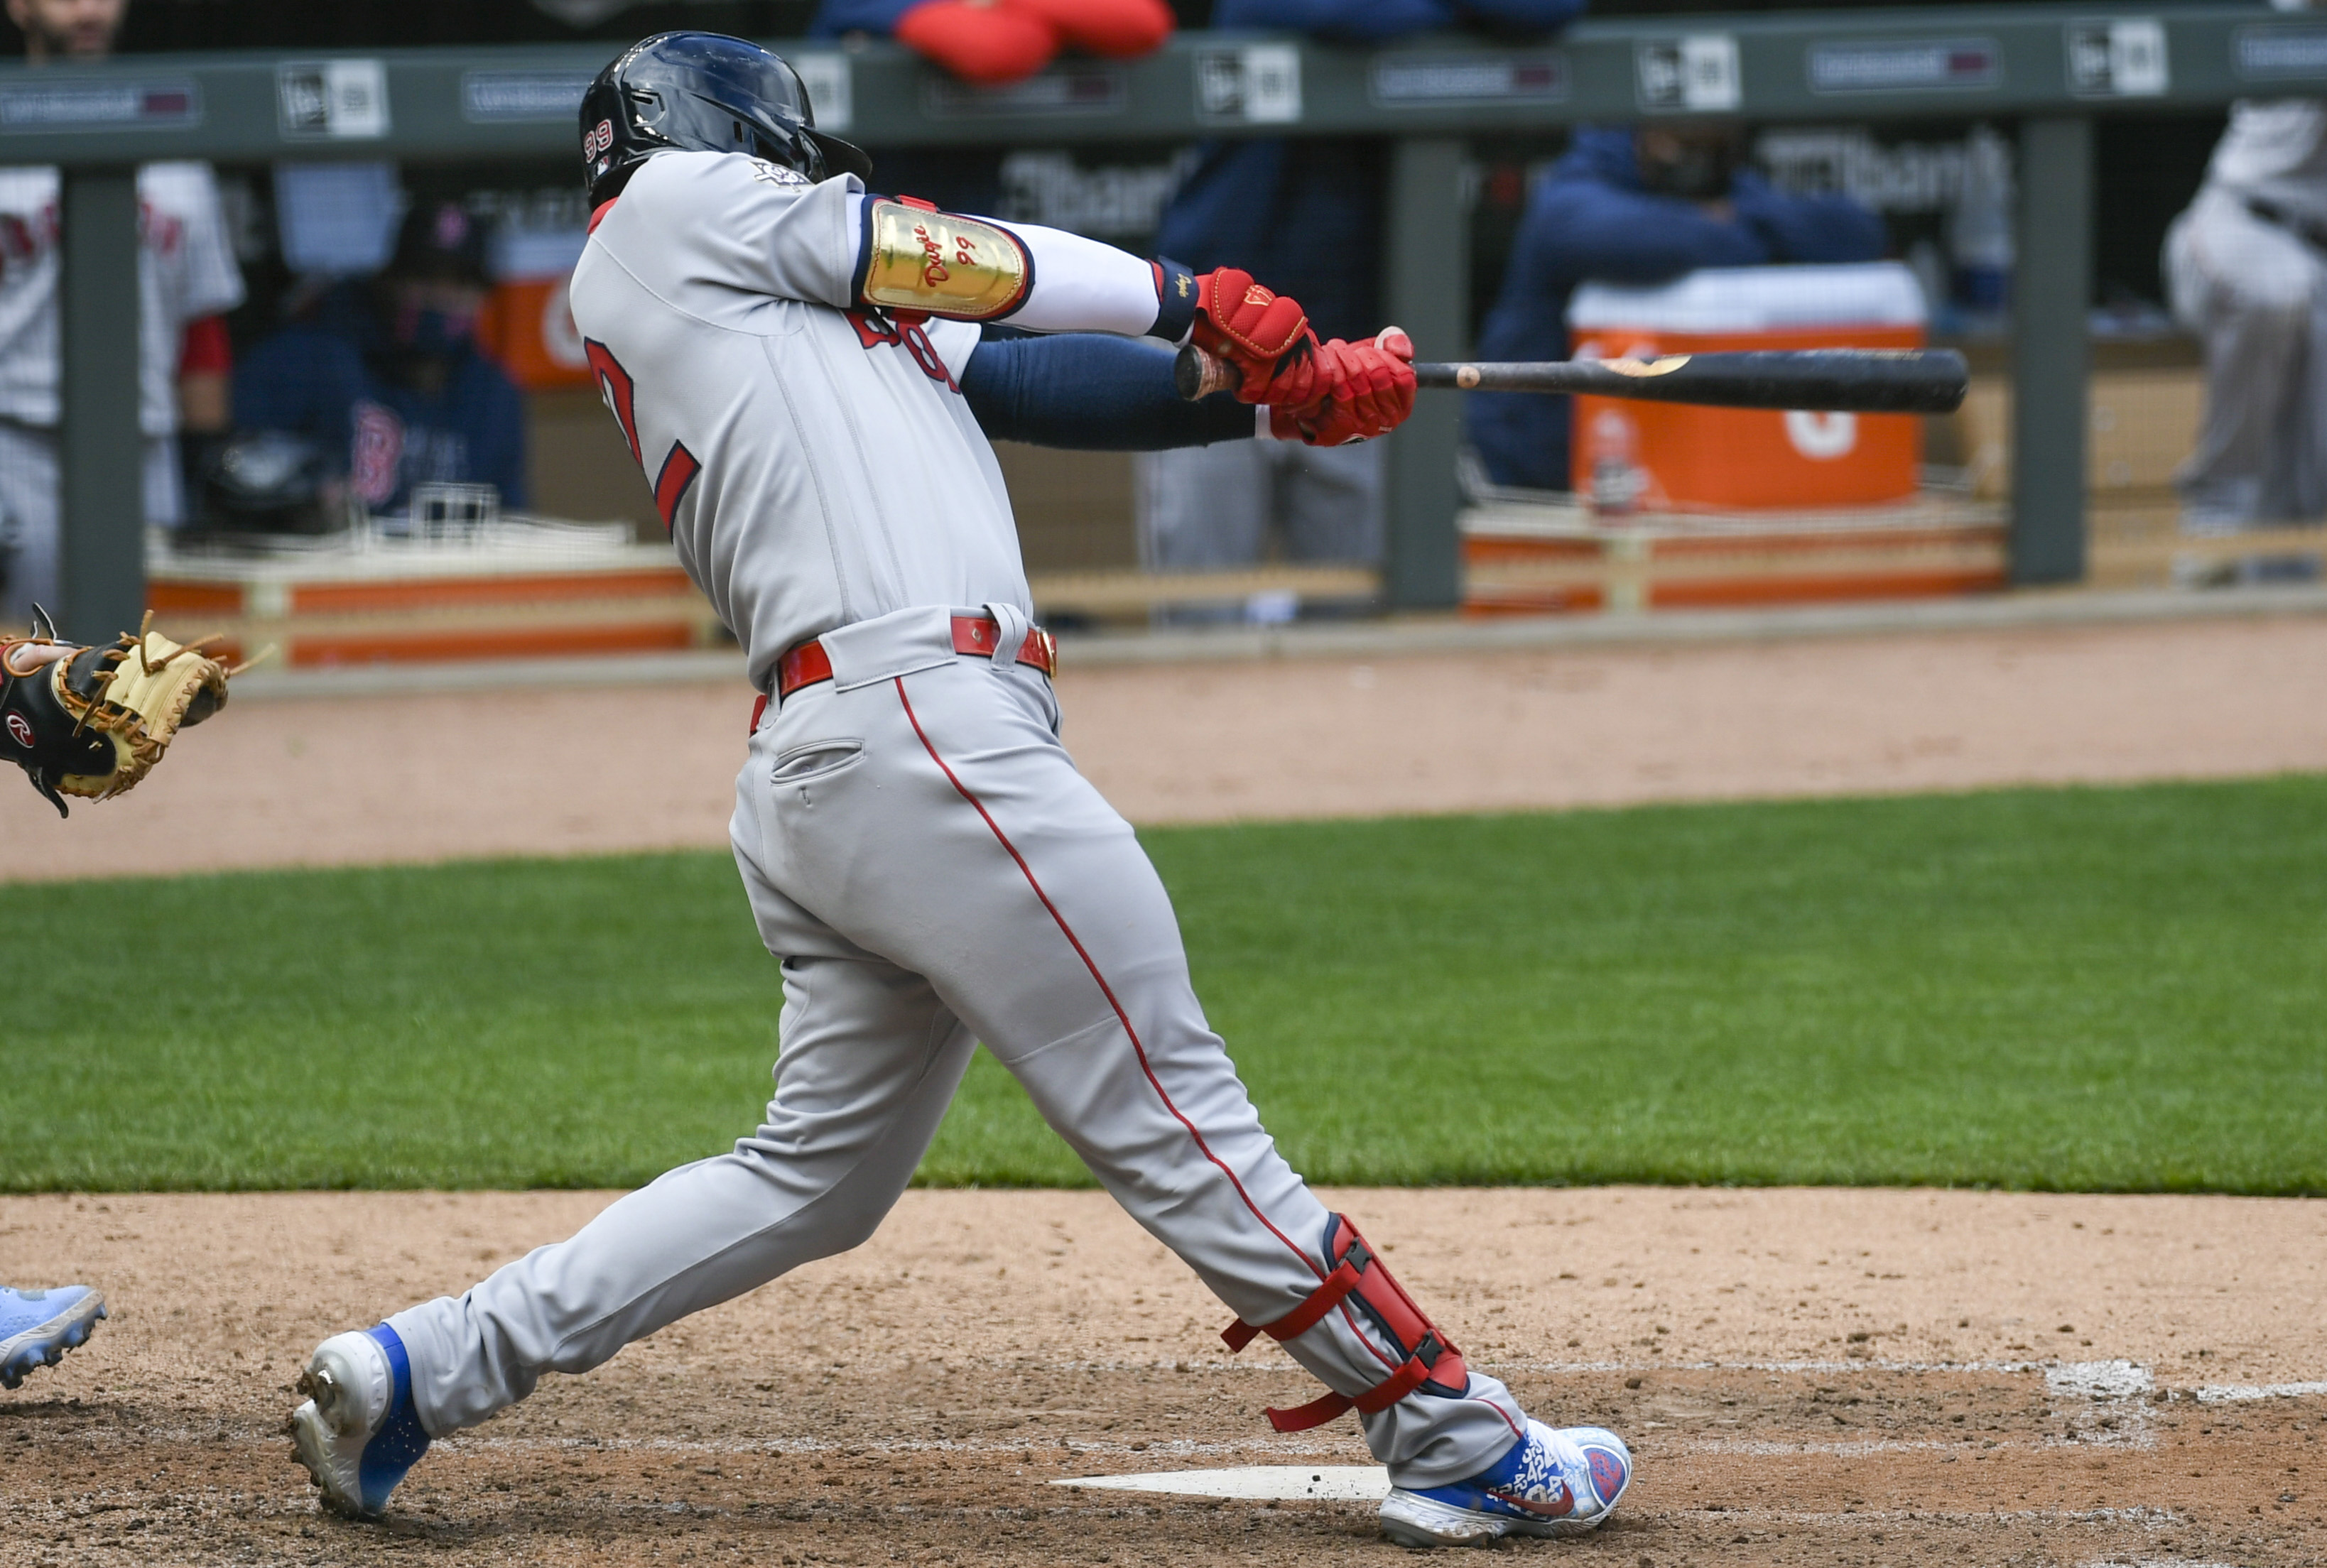 Lefty Red Sox hitter swinging bat